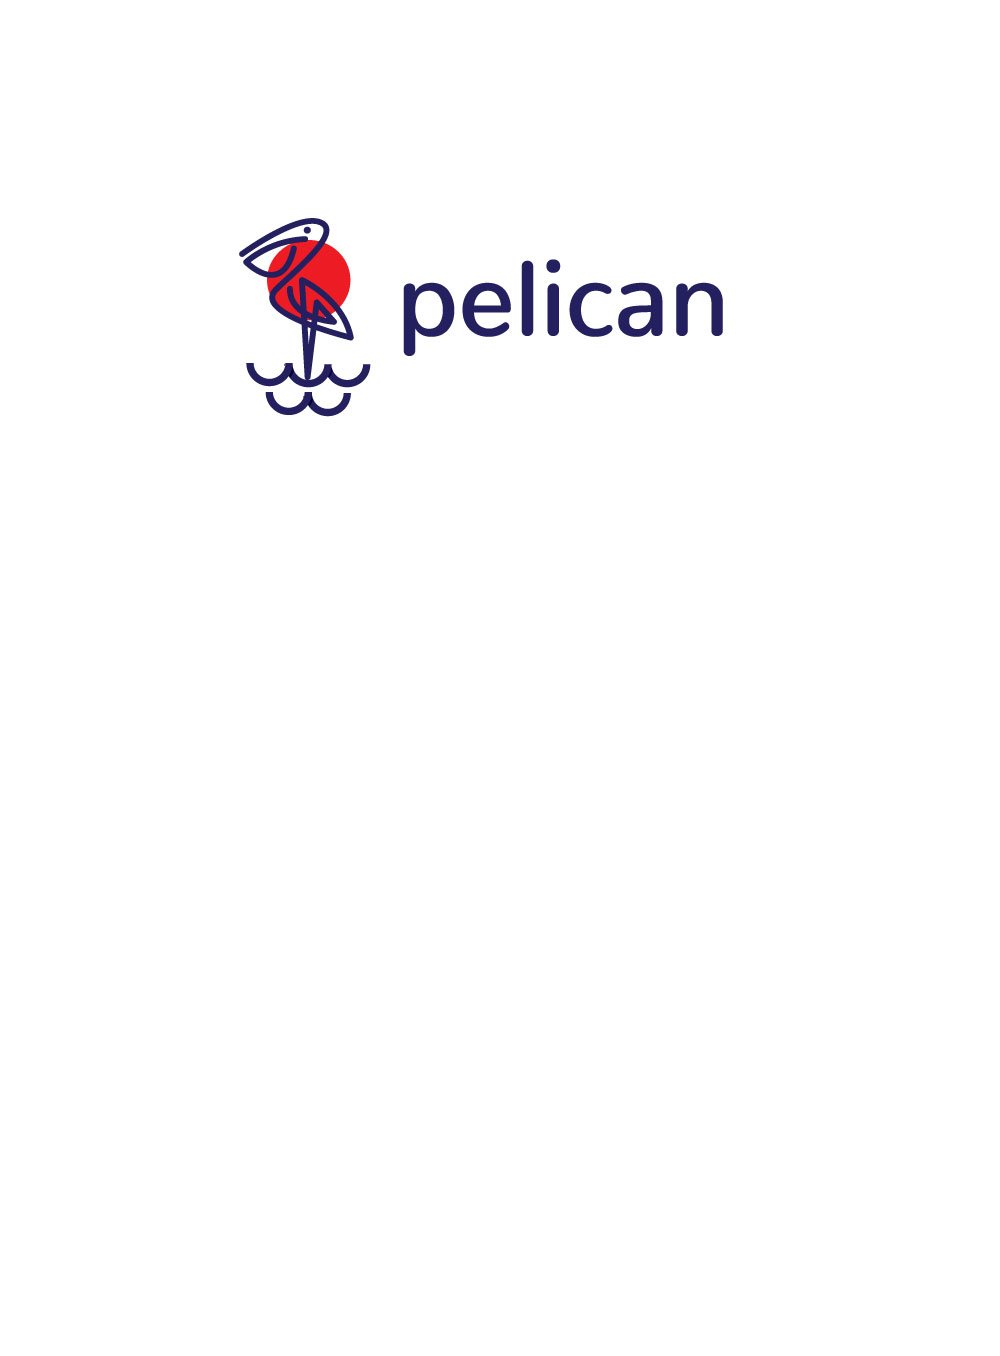 pelican logo 2 cover image.